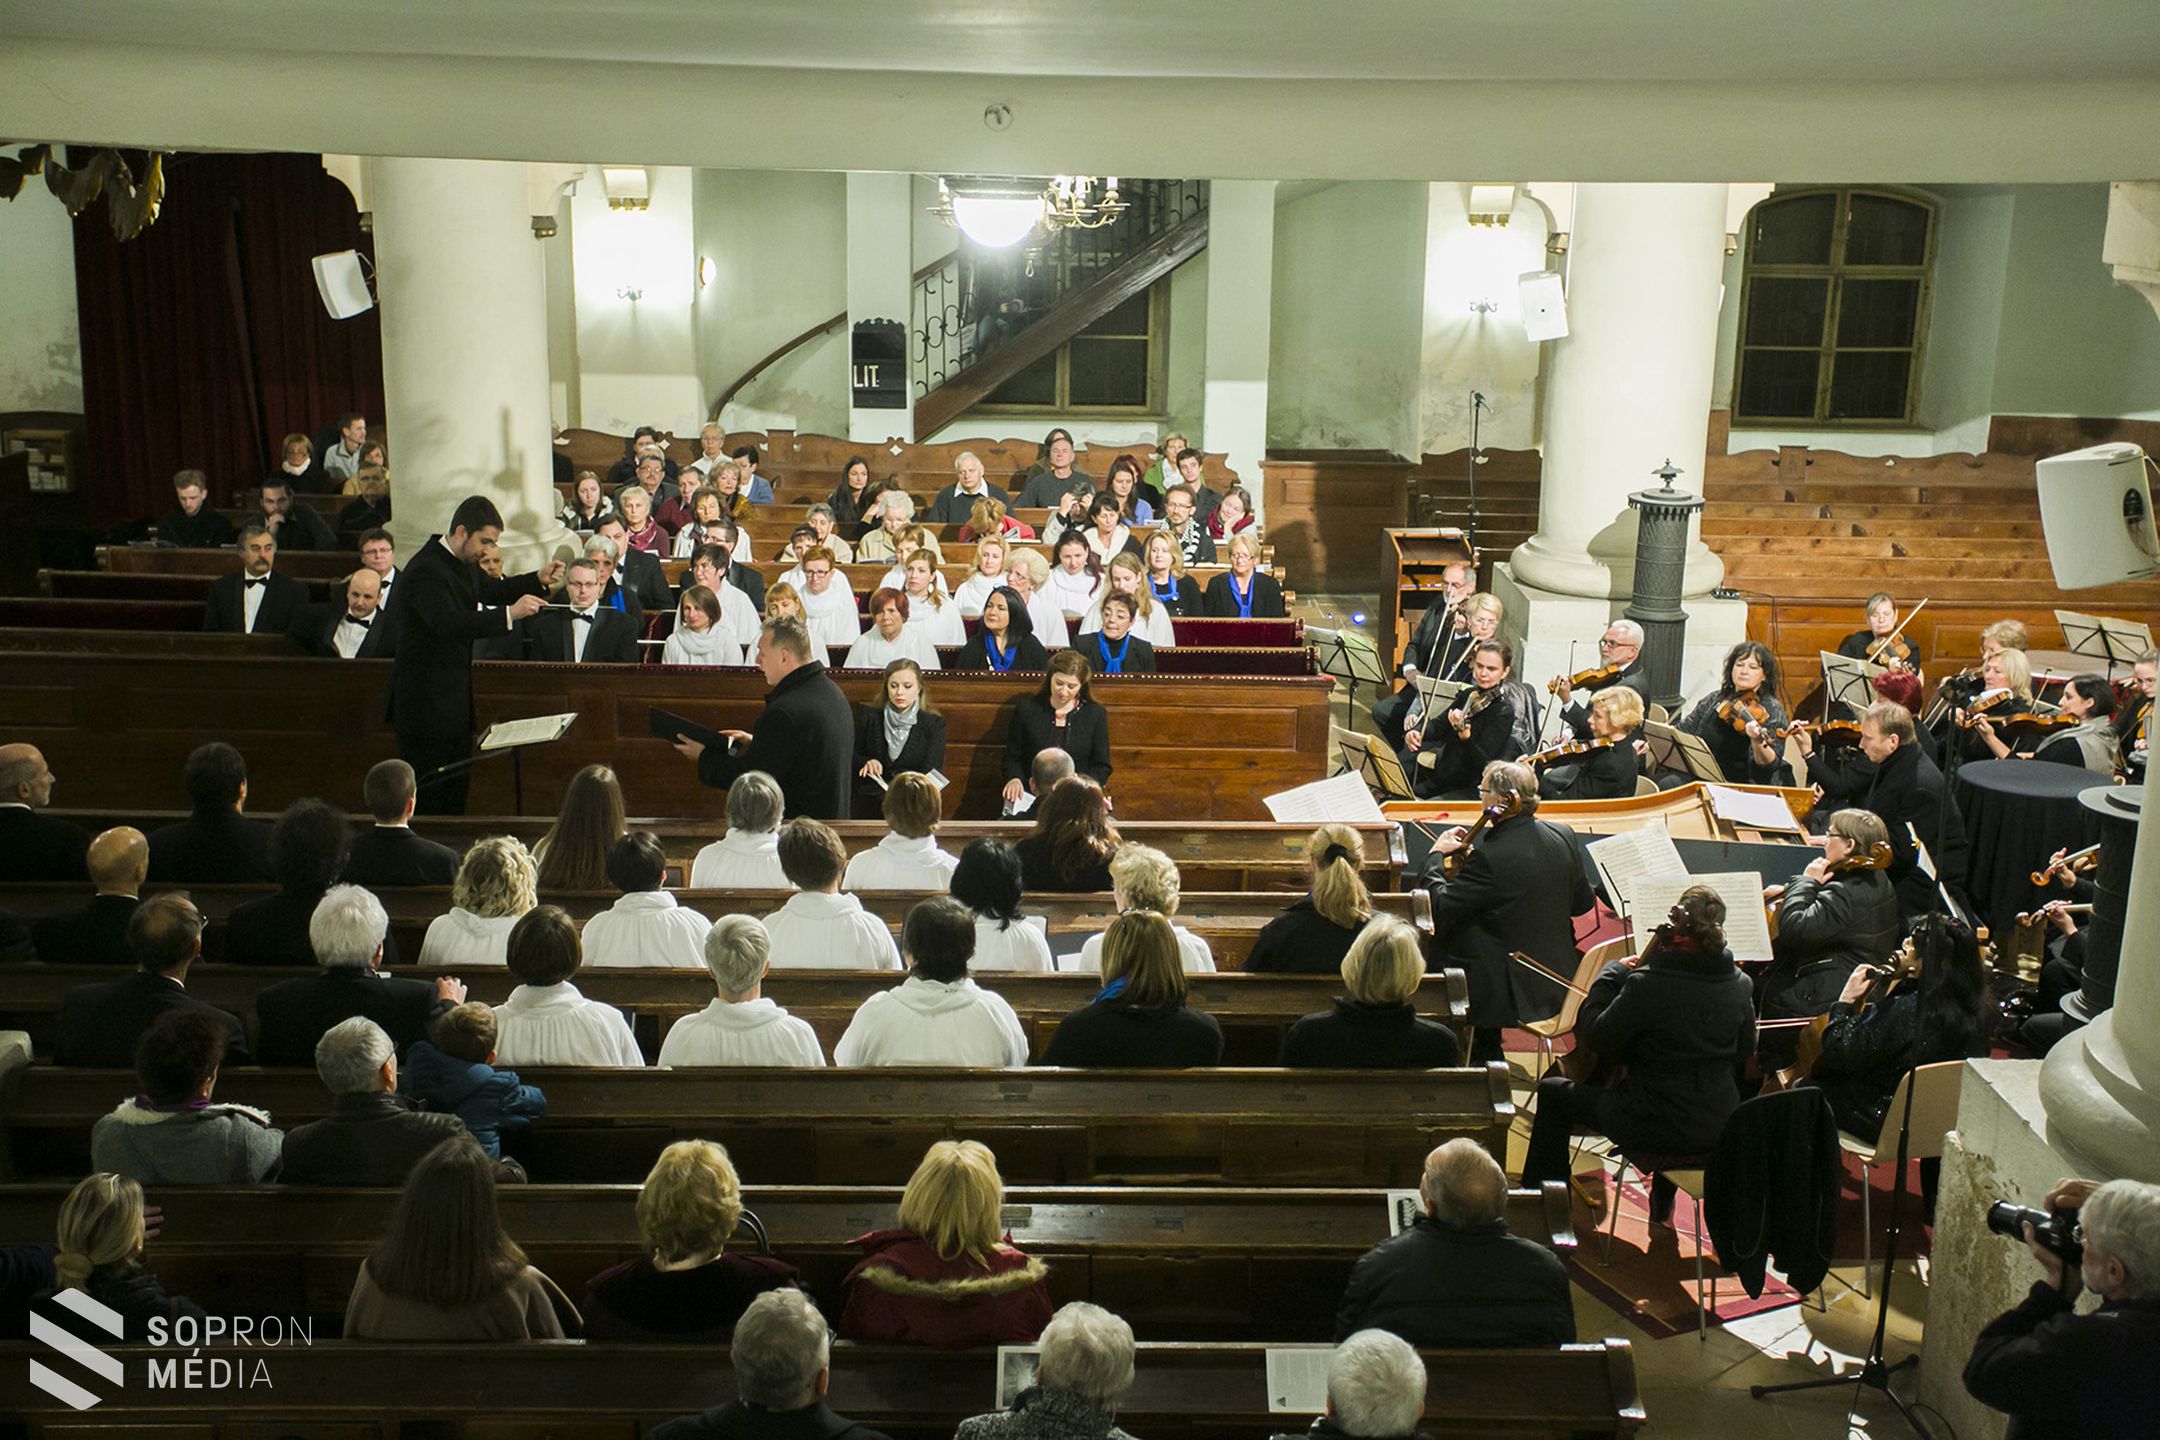 Händel Messiása az Evangélikus templomban!